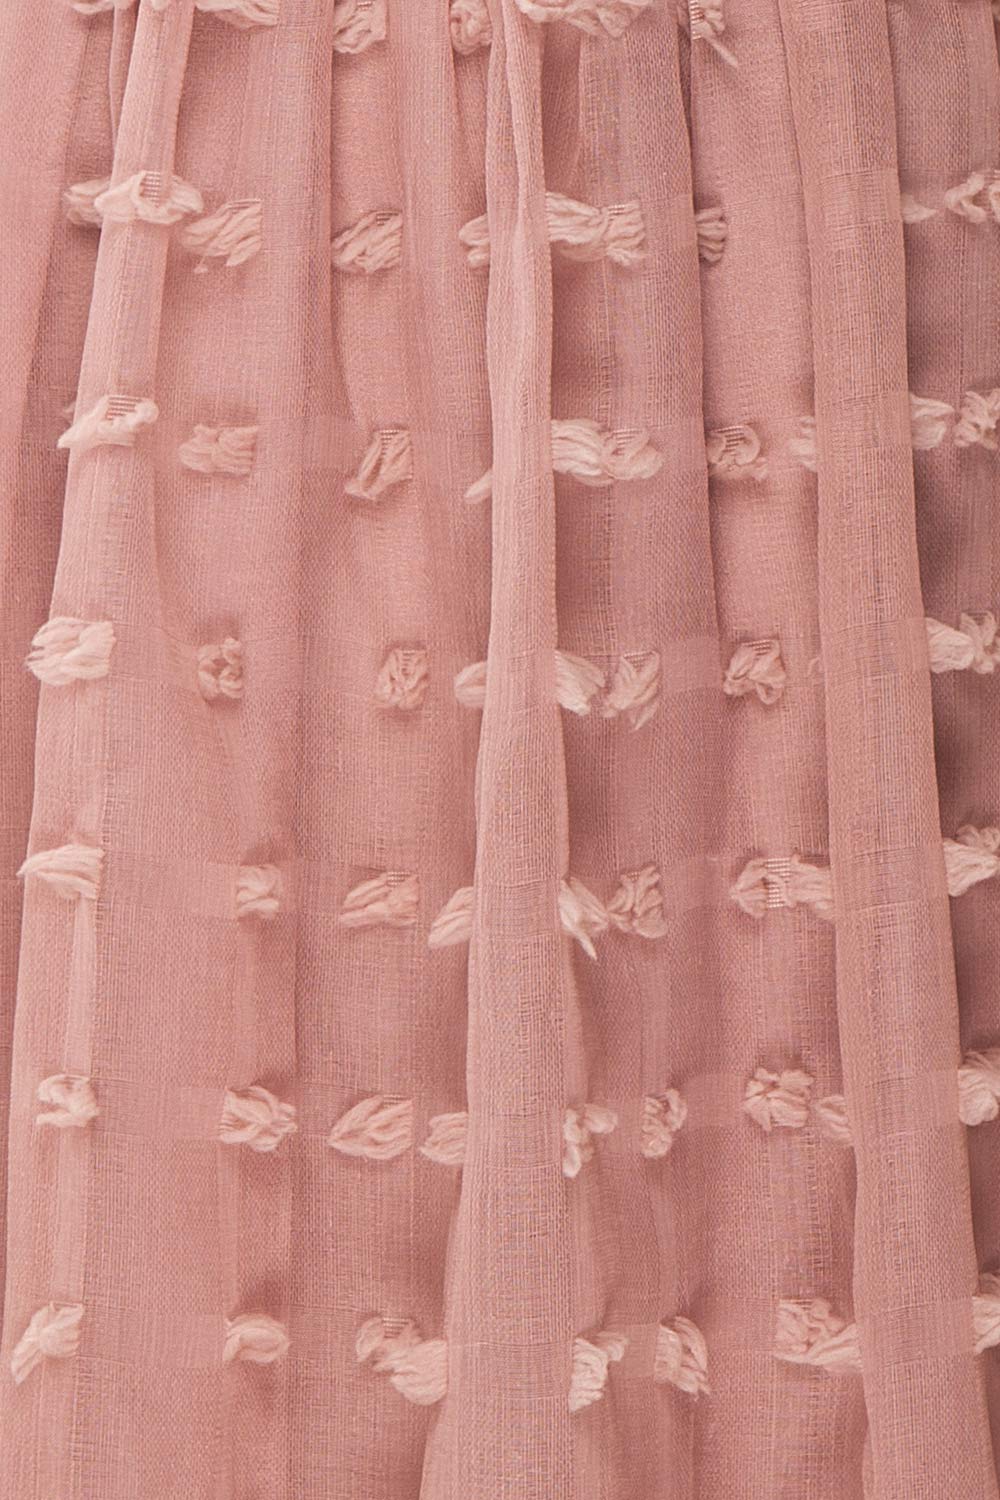 Flavie Rose Pink A-Line Skirt | Jupe Ligne A | Boutique 1861 fabric detail 